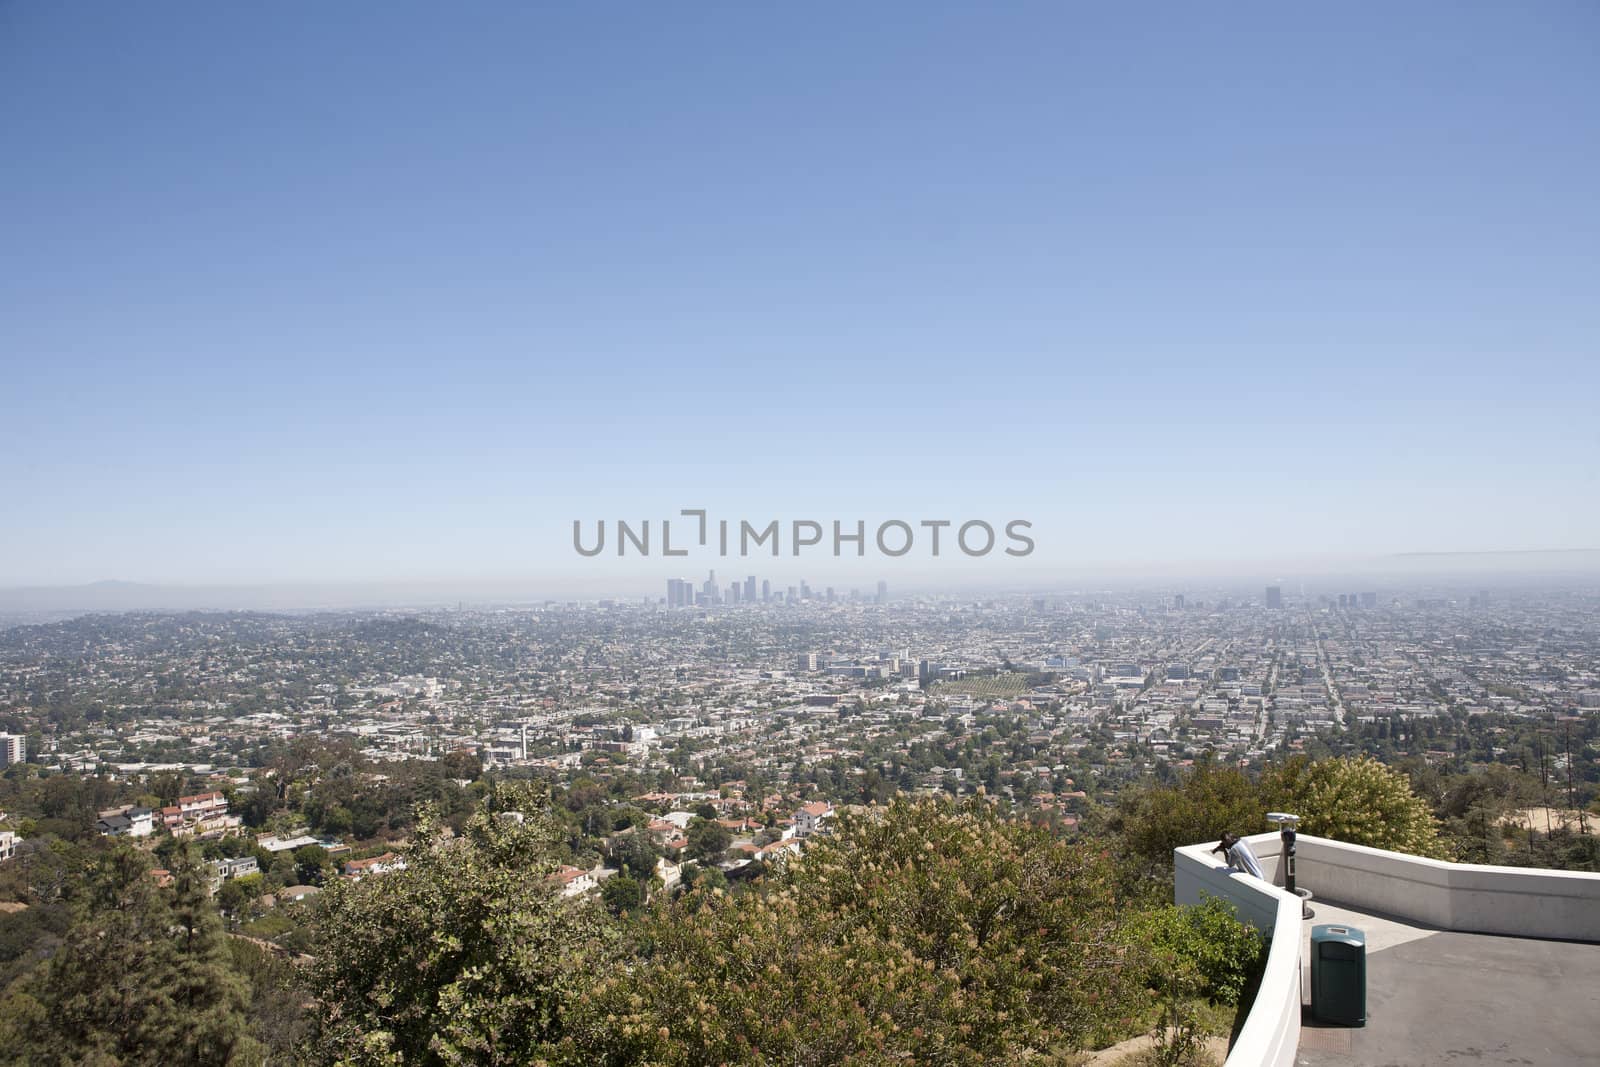 Los Angeles skyline by GeneG